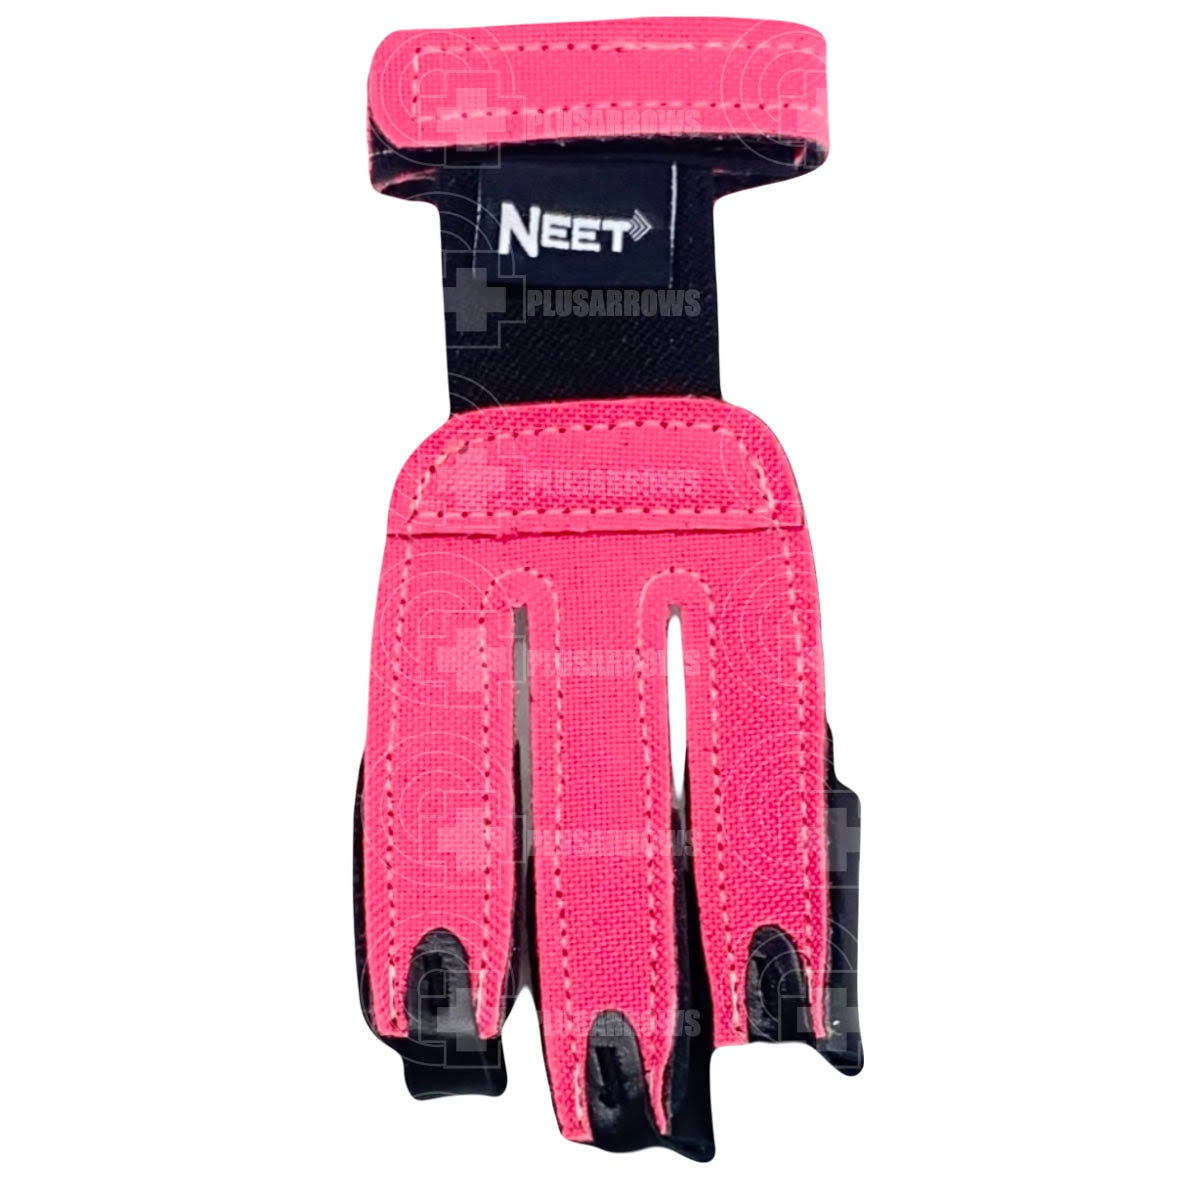 NEET NY-G2-N Youth Shooting Glove Neon Pink Regular